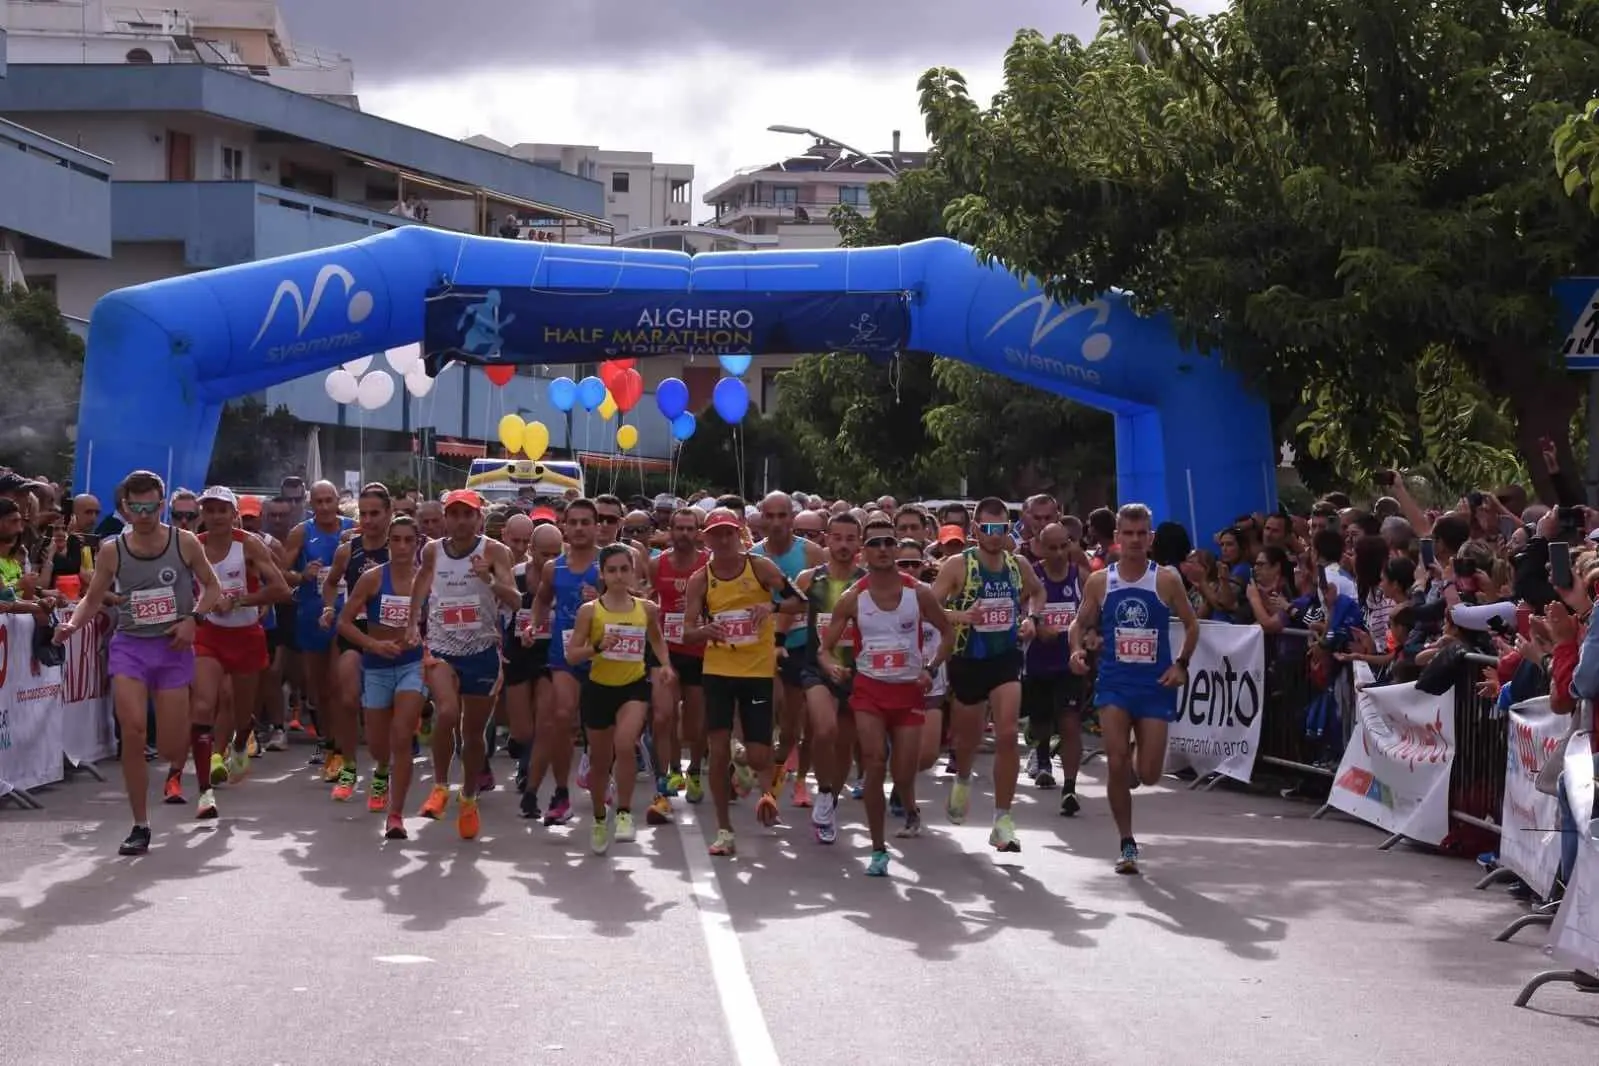 Una partenza della Alghero Half Marathon (L'Unione Sarda)